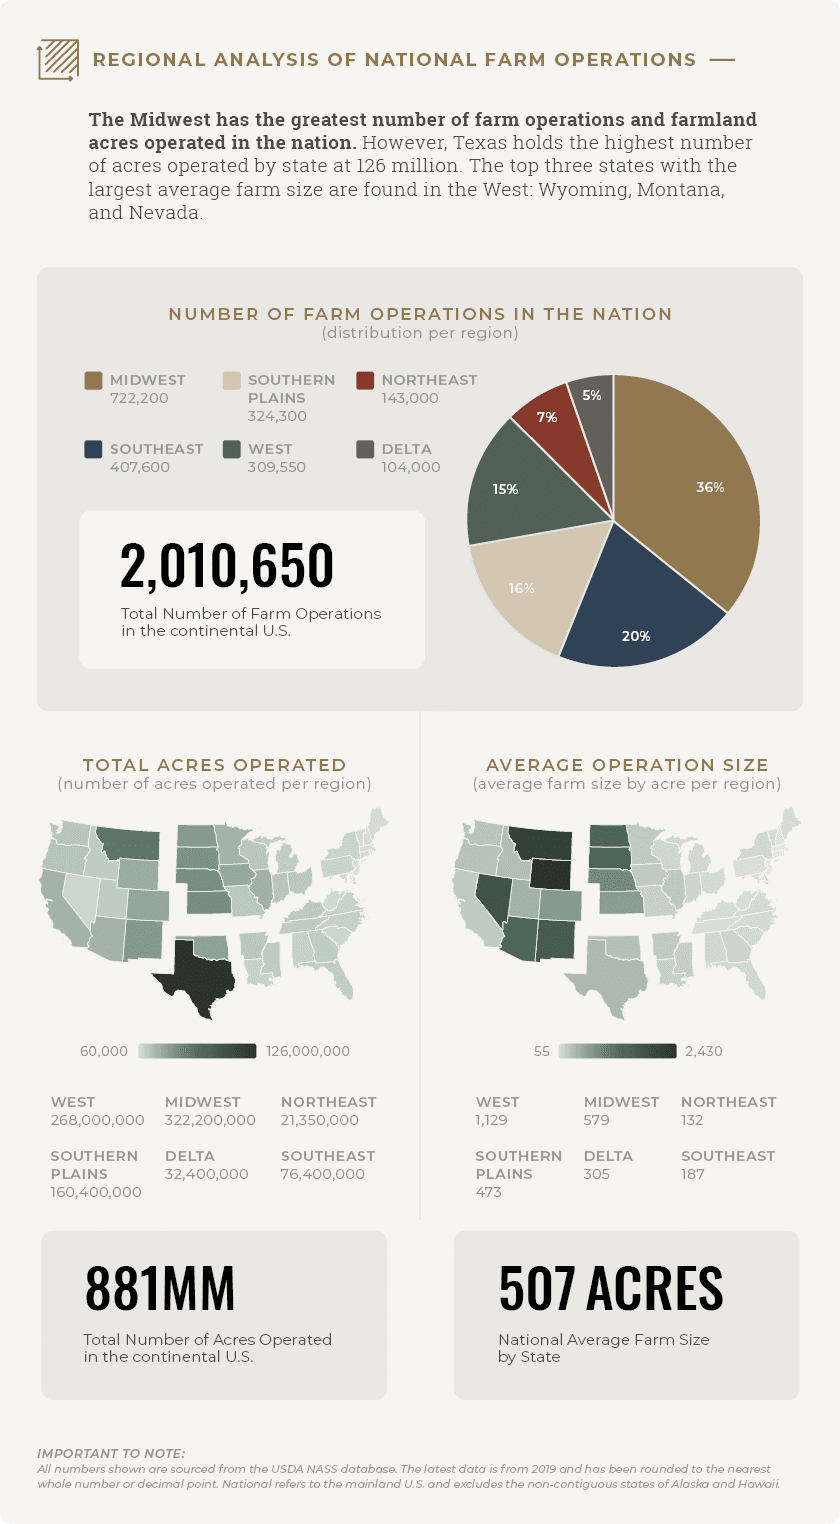 U.S. regional farm operation data from the USDA NASS database.